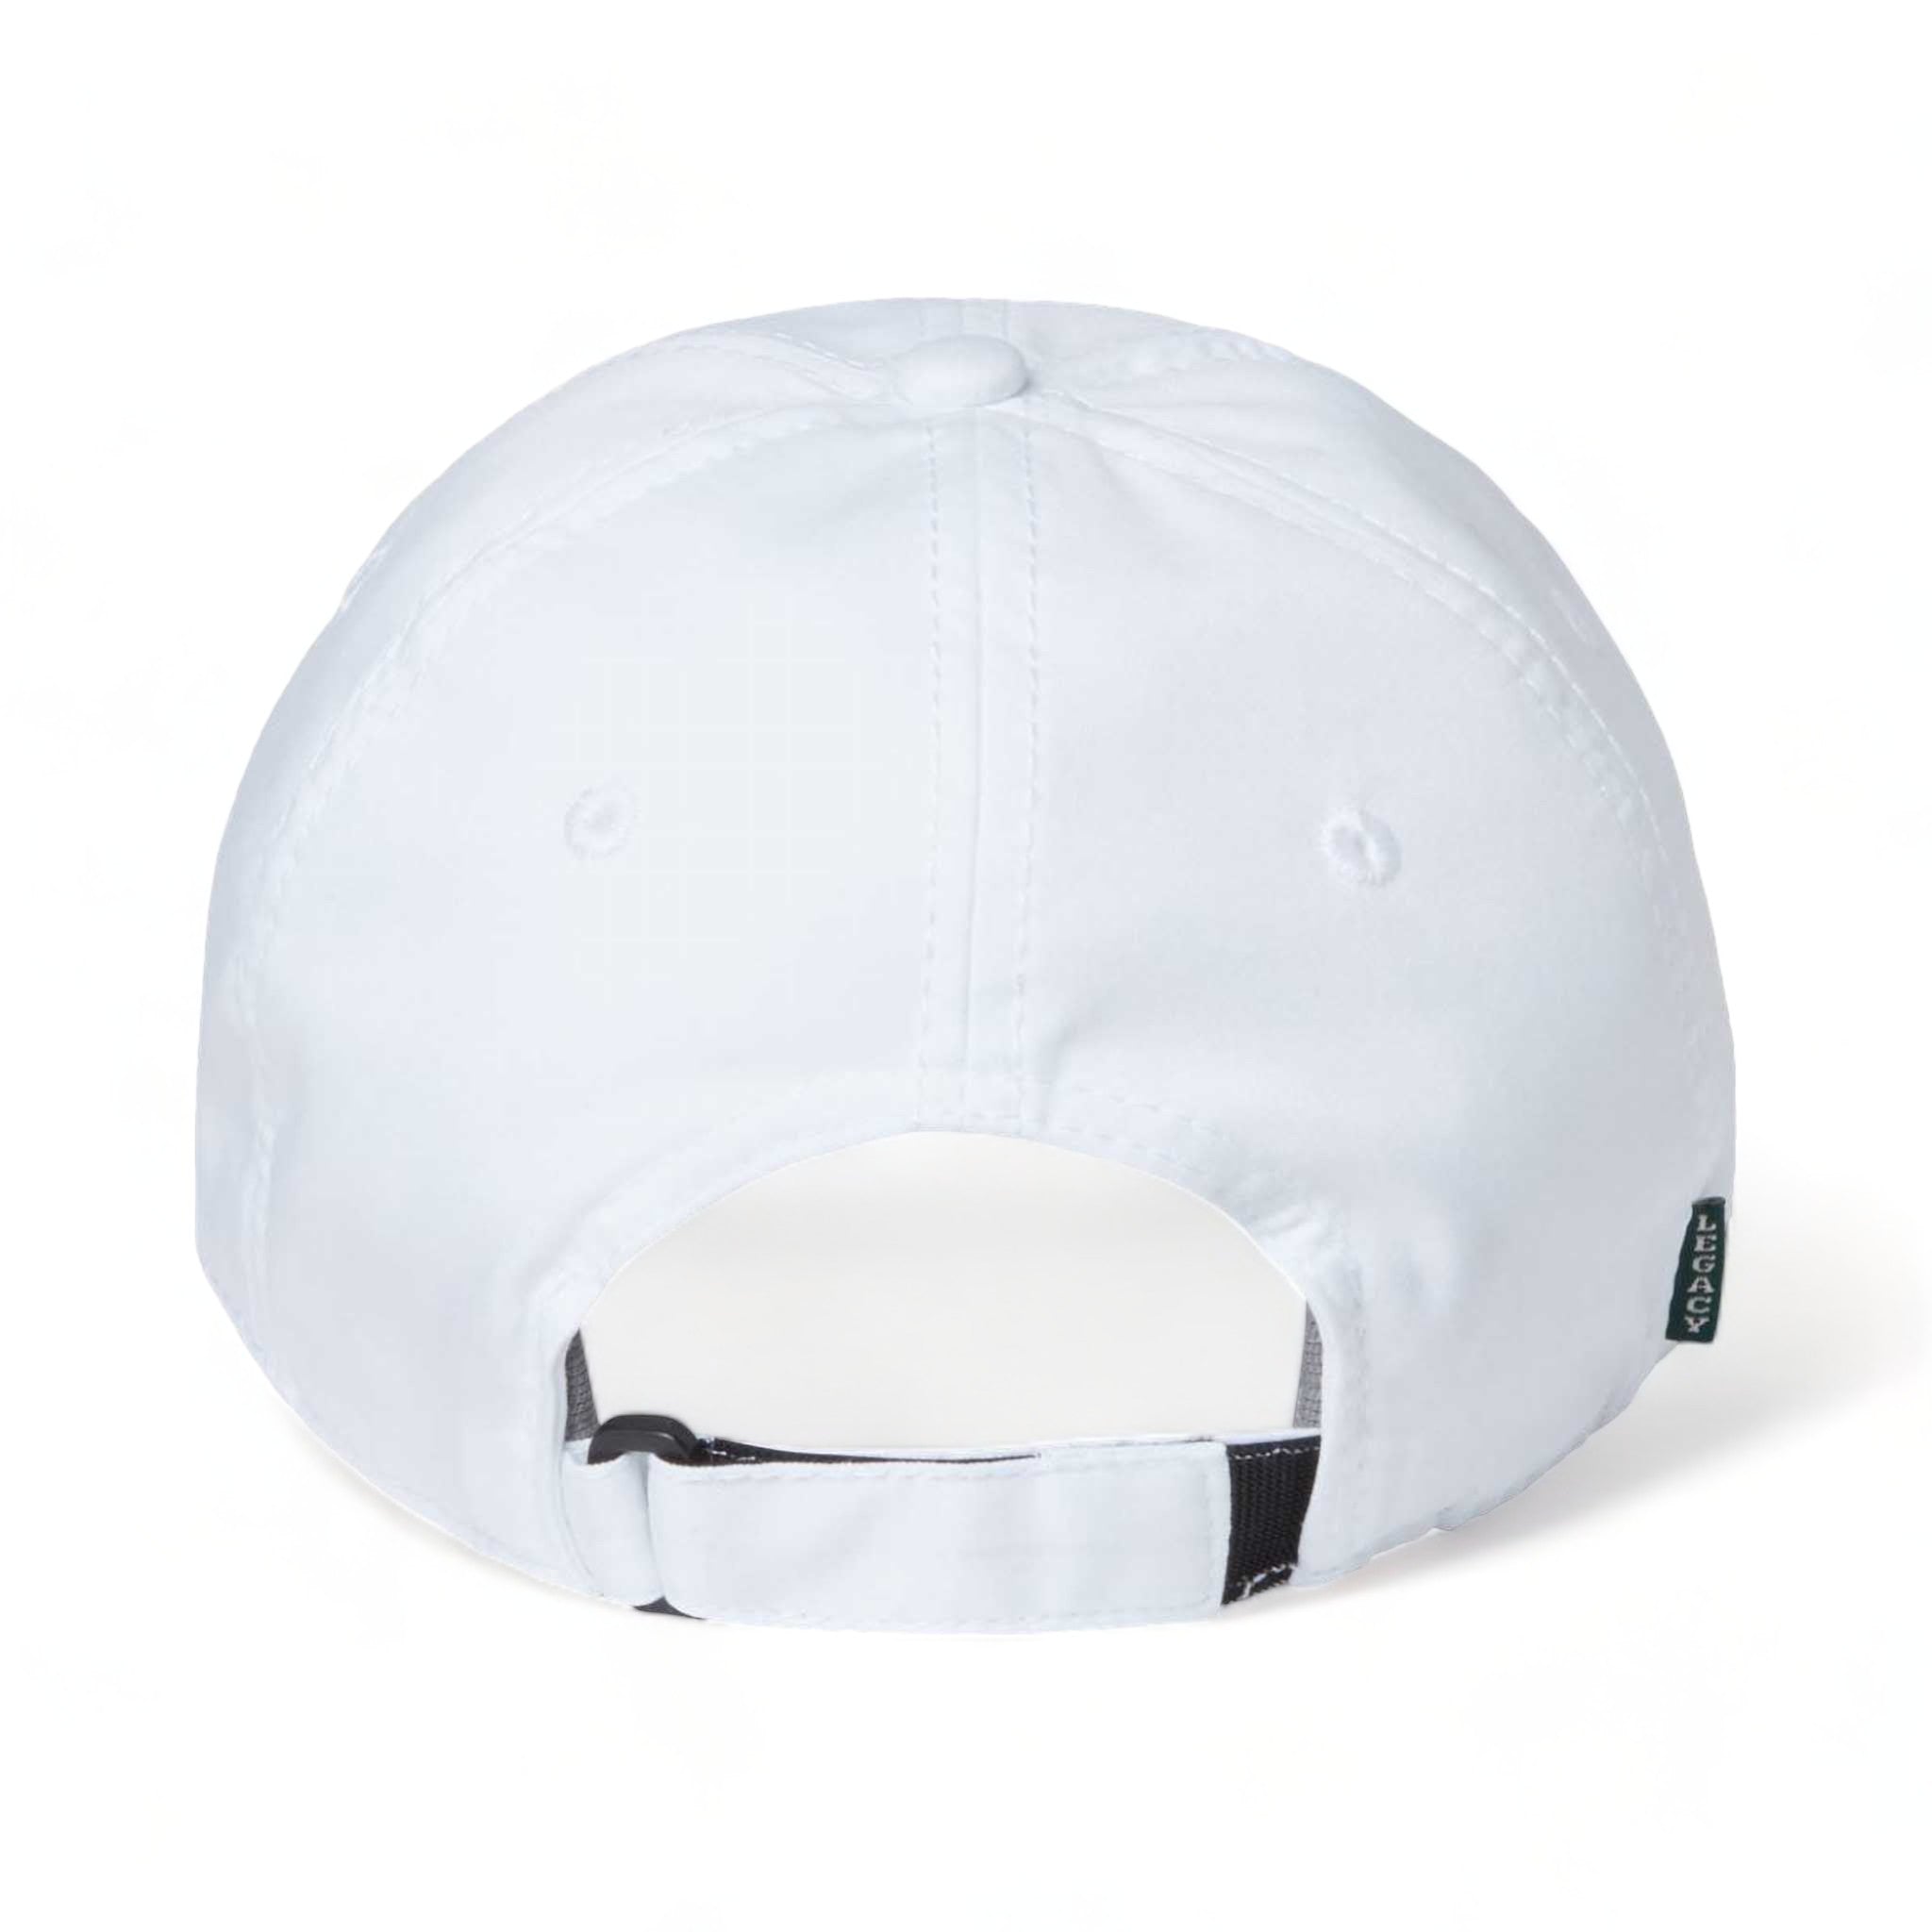 Back view of LEGACY CFA custom hat in white